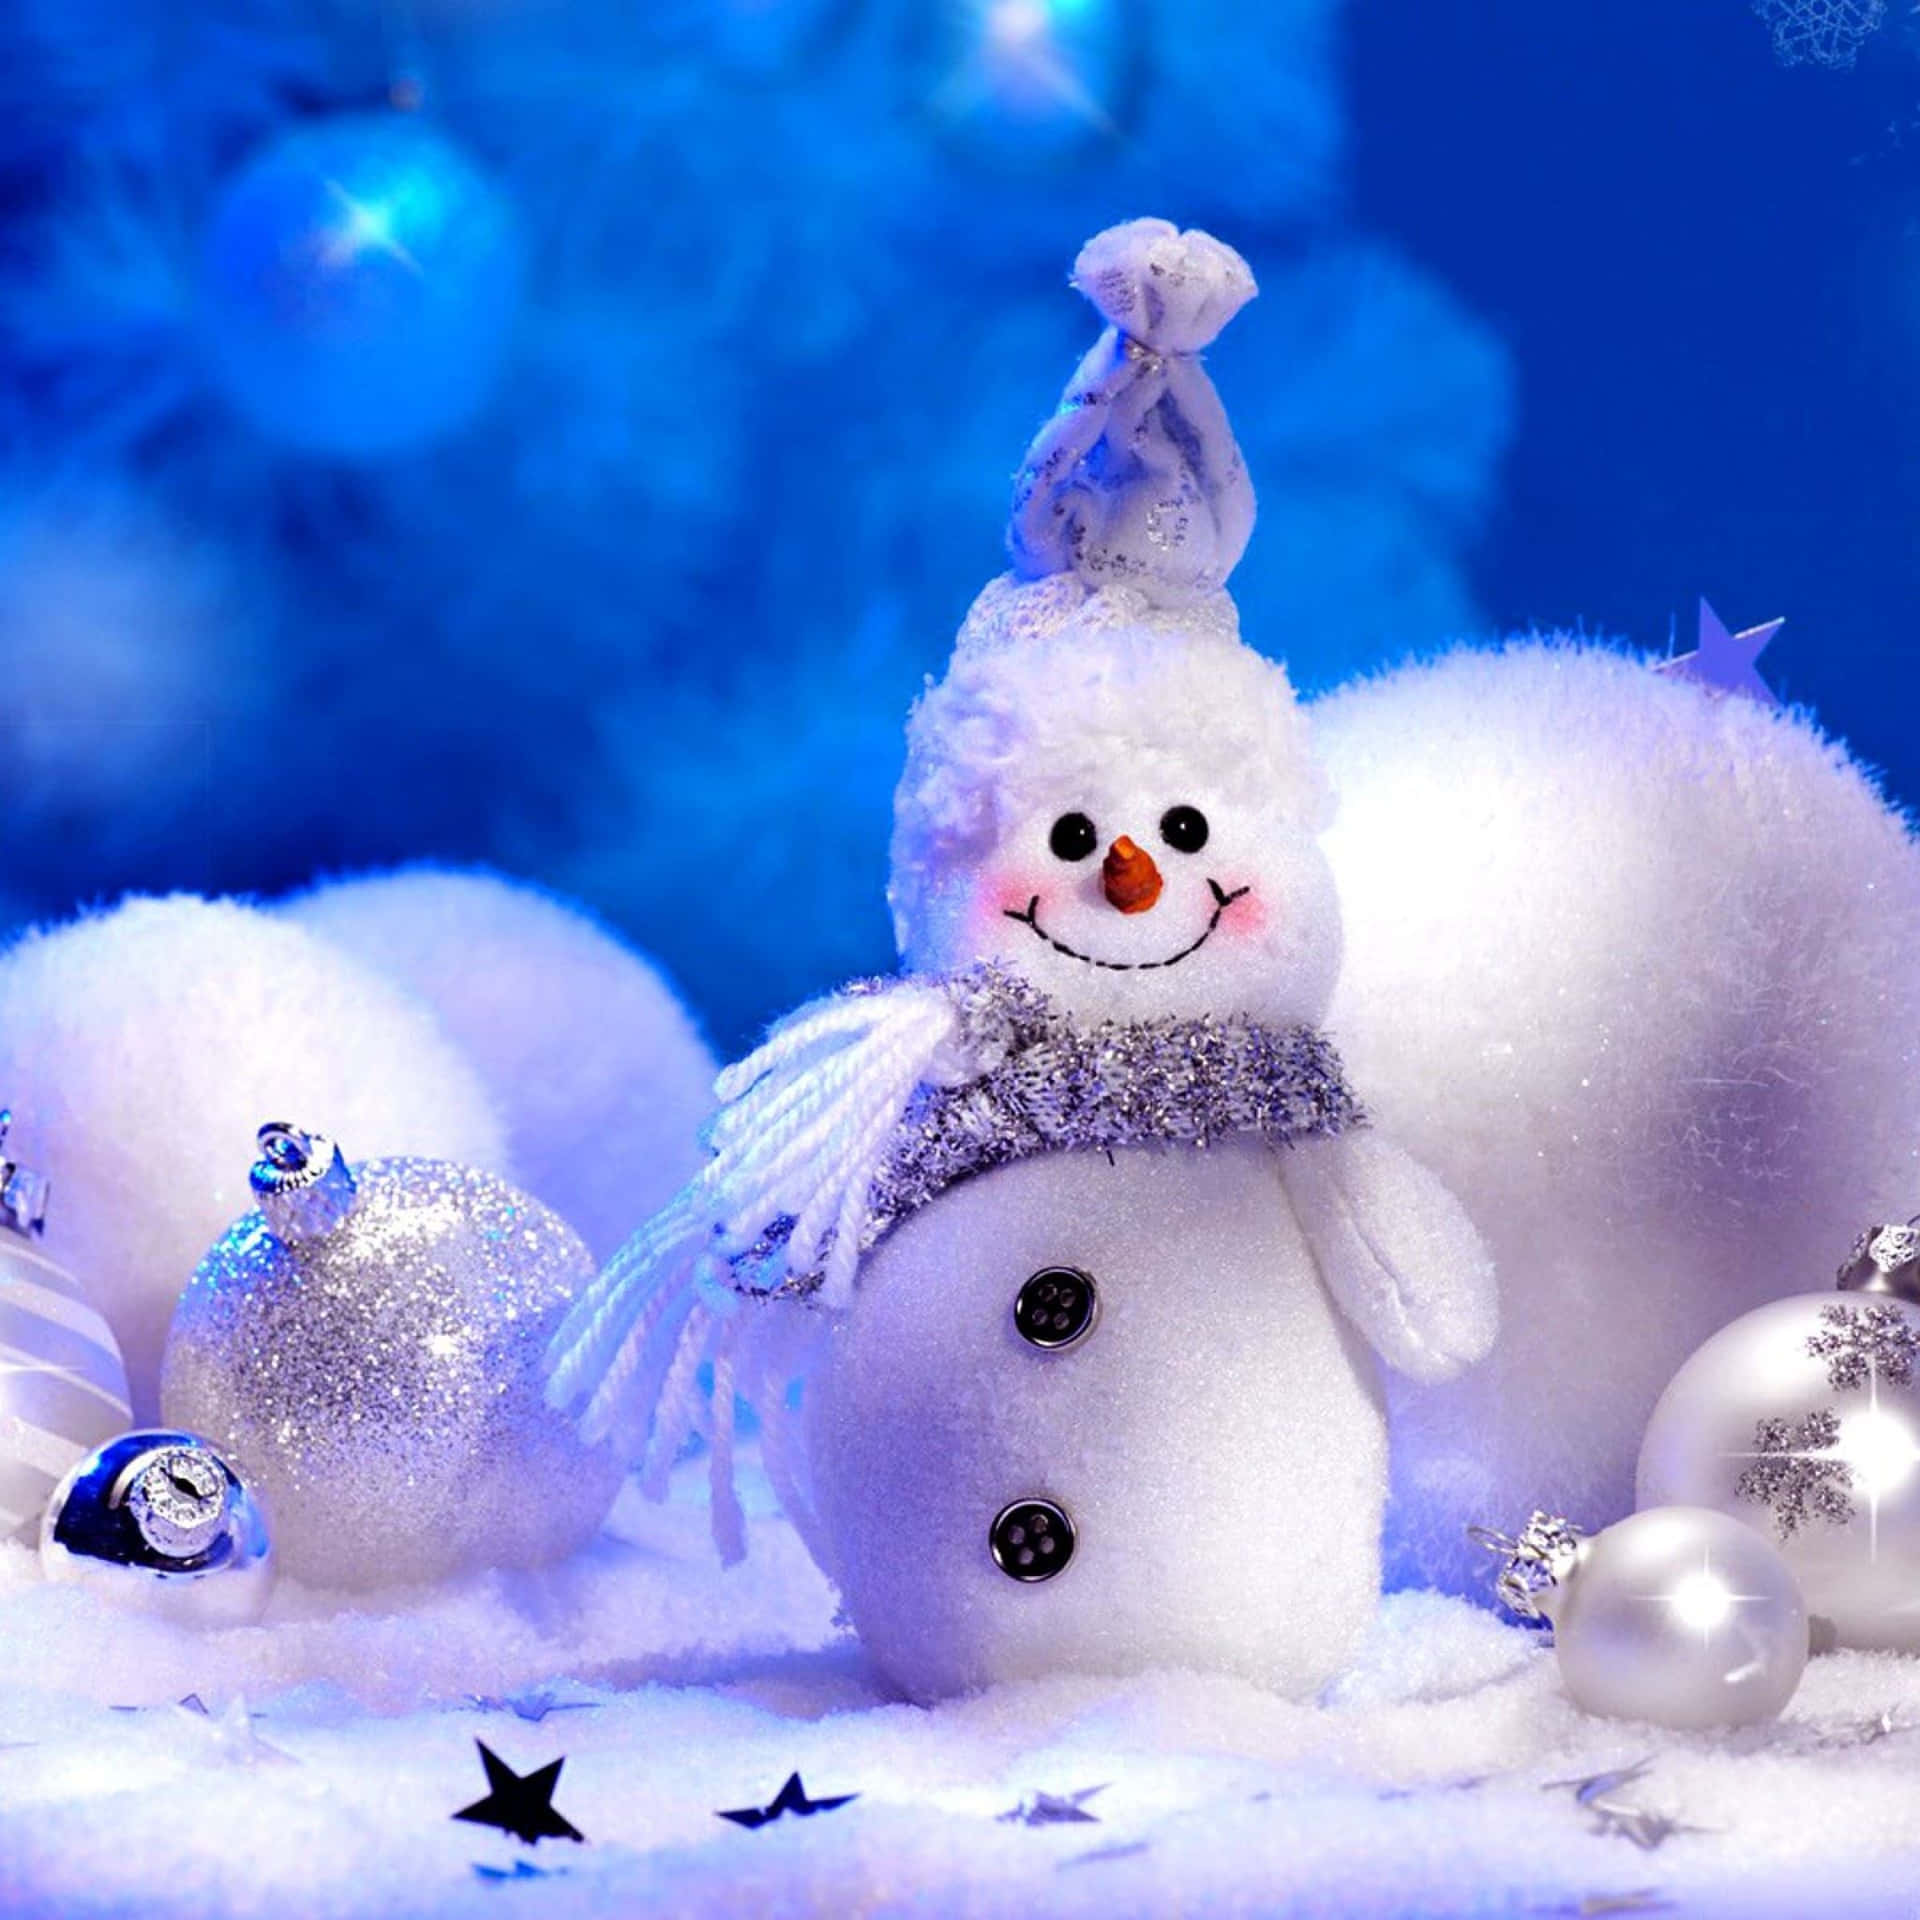 Festive Snowman Winter Wonderland Wallpaper